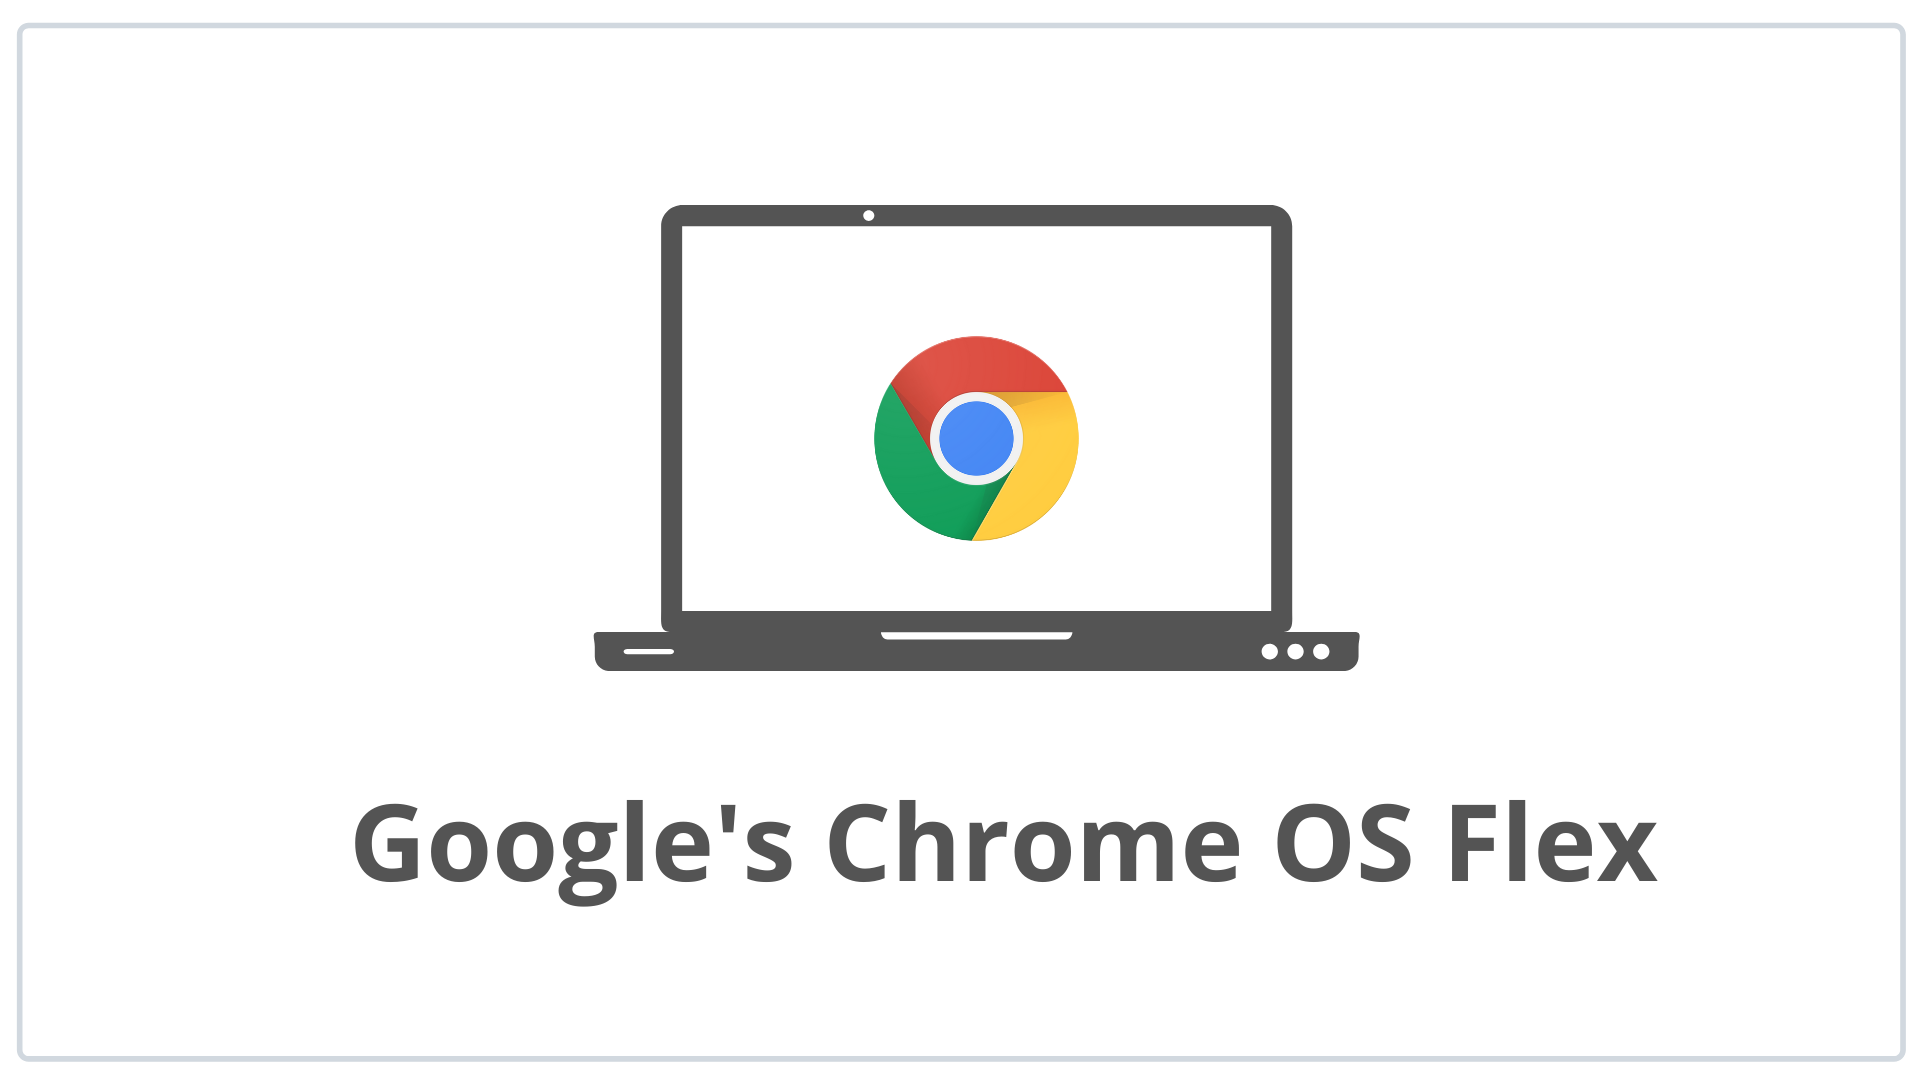 Is Google Aspiring For Desktop Supremacy With Its Chrome OS Flex?